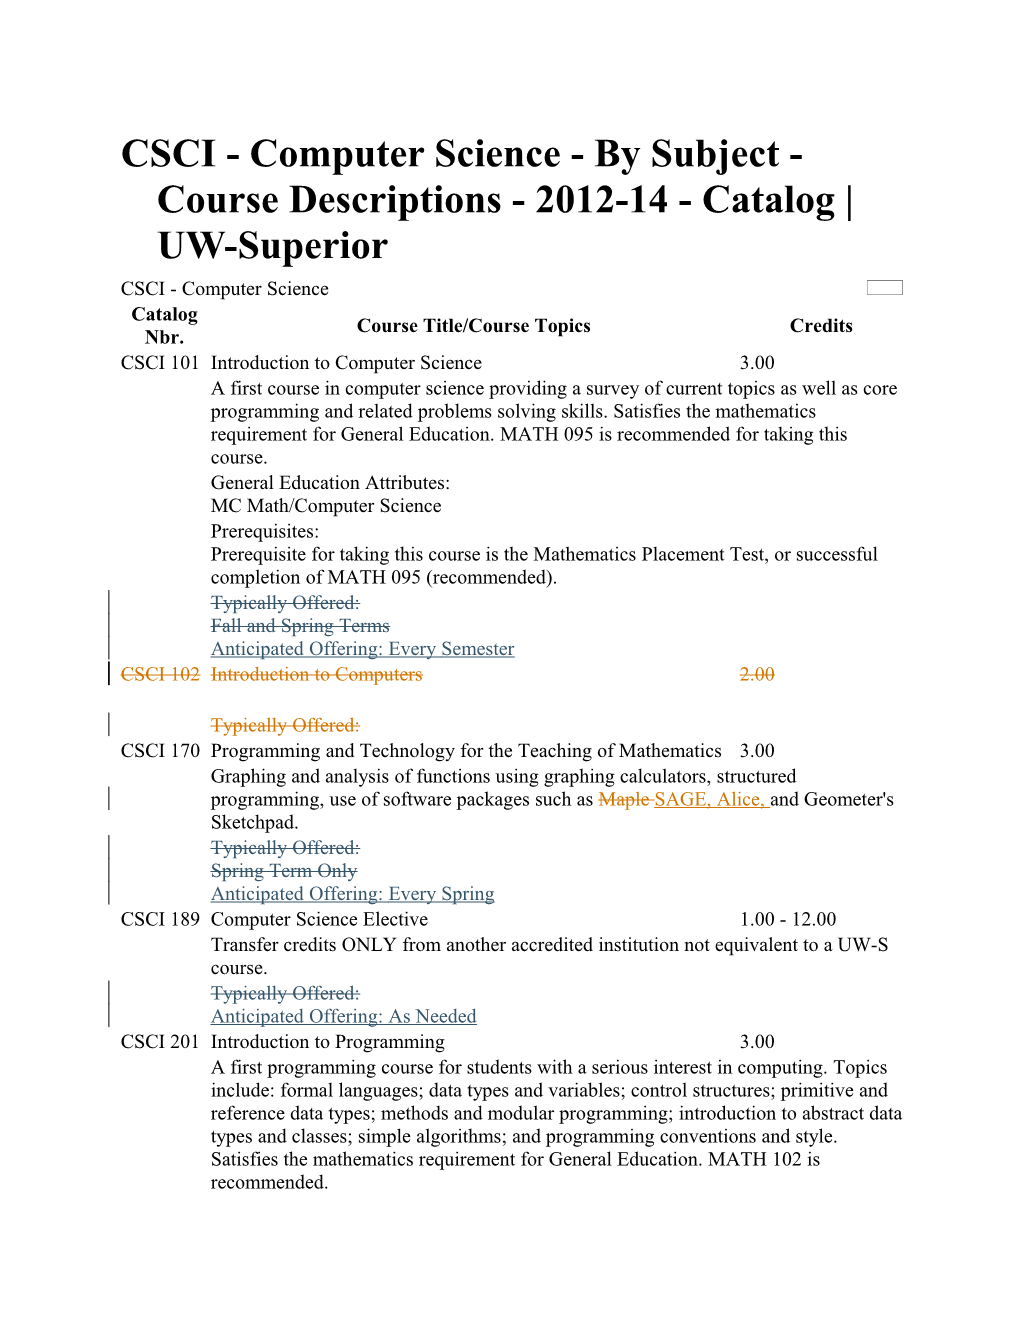 CSCI - Computer Science - by Subject - Course Descriptions - 2012-14 - Catalog UW-Superior